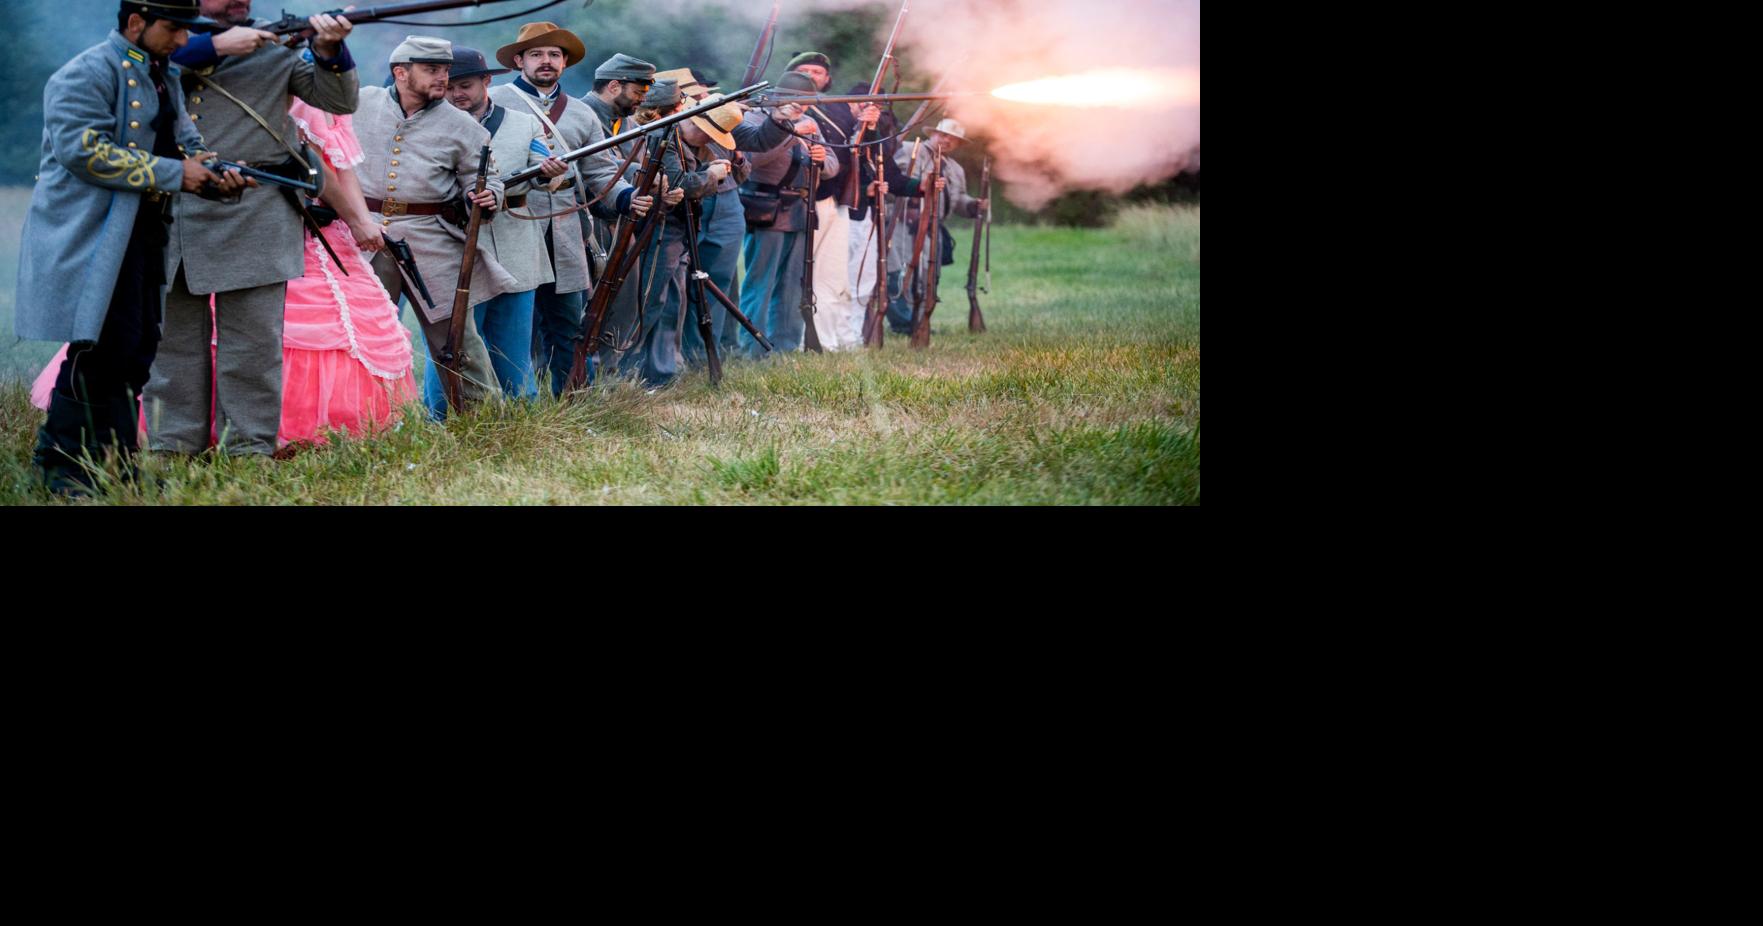 Photos: Civil War battle reenactment at Union Gap Old Town Days